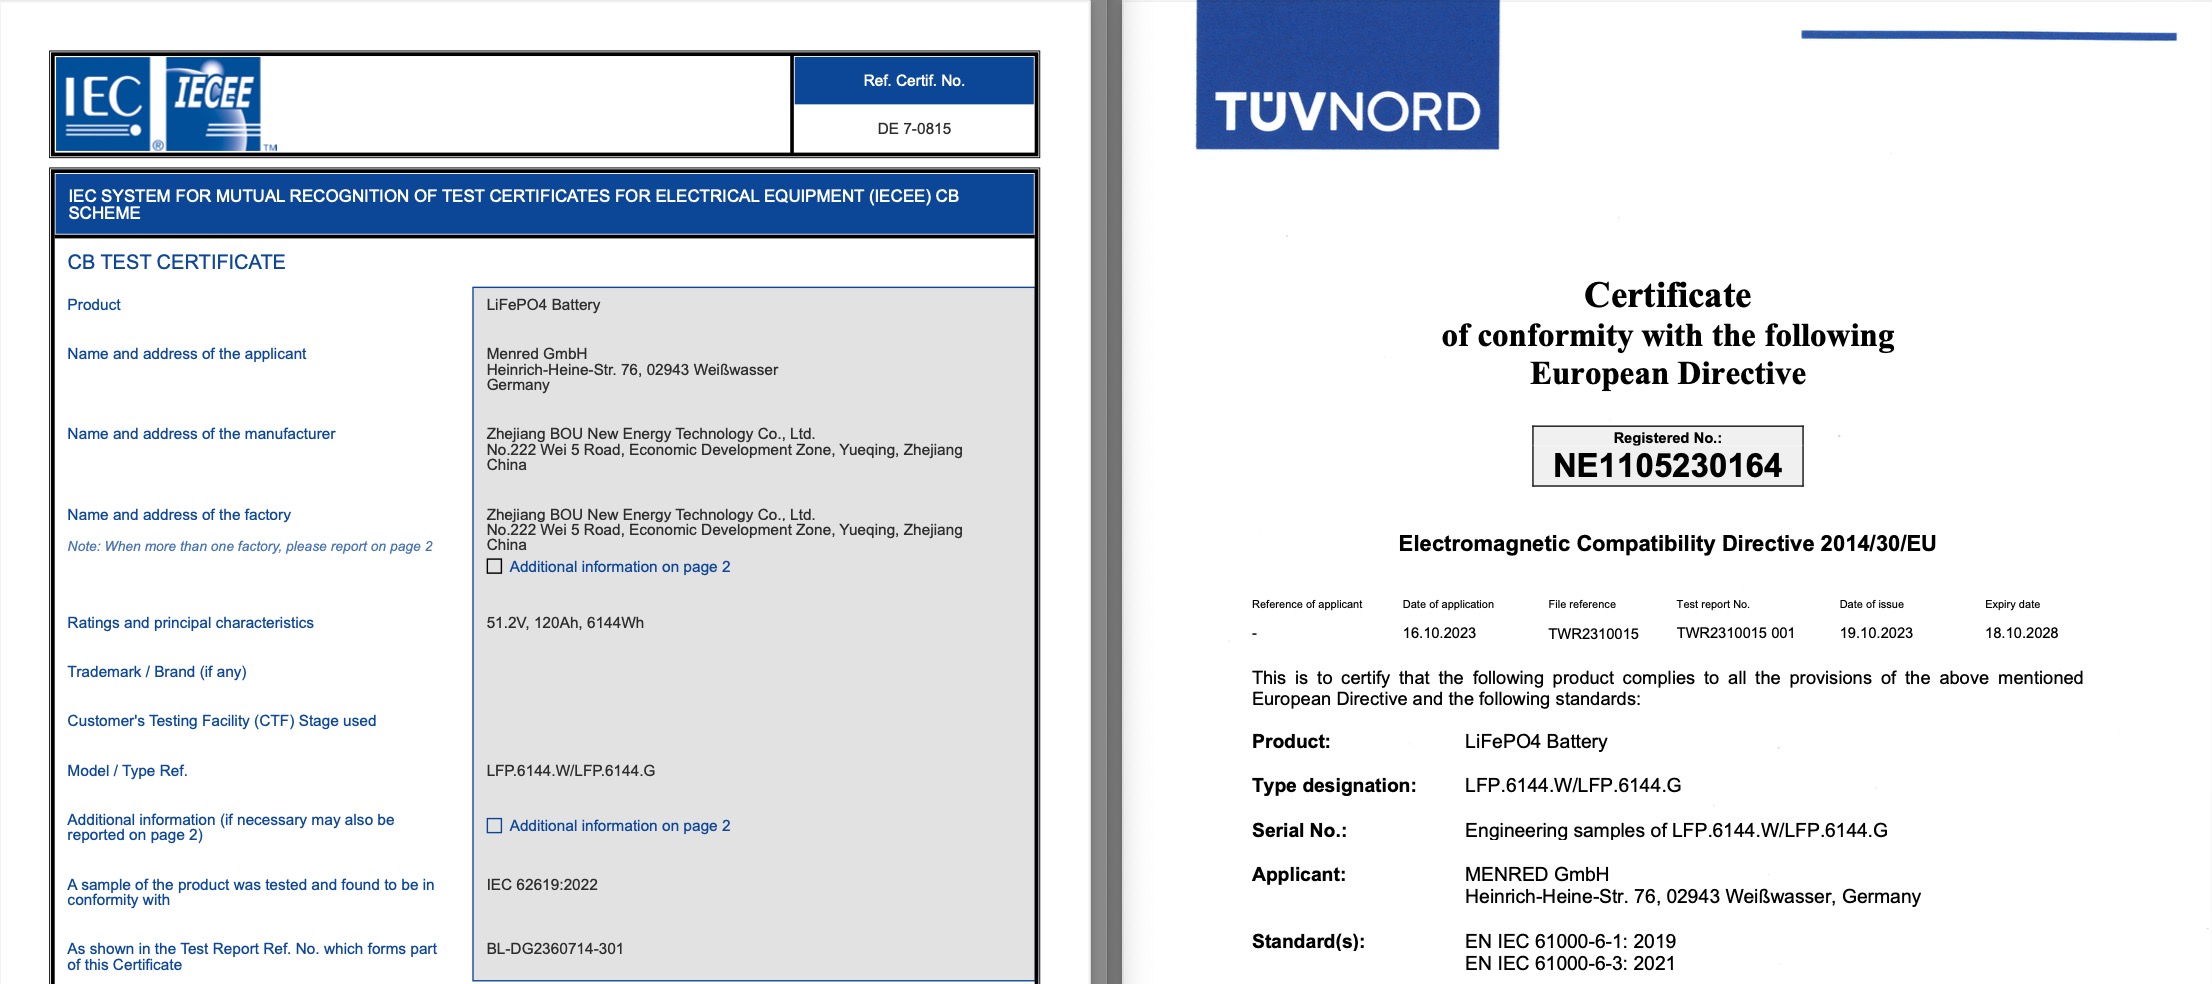 IEC 62619:2022 and IEC 61000-1/3 Certifications